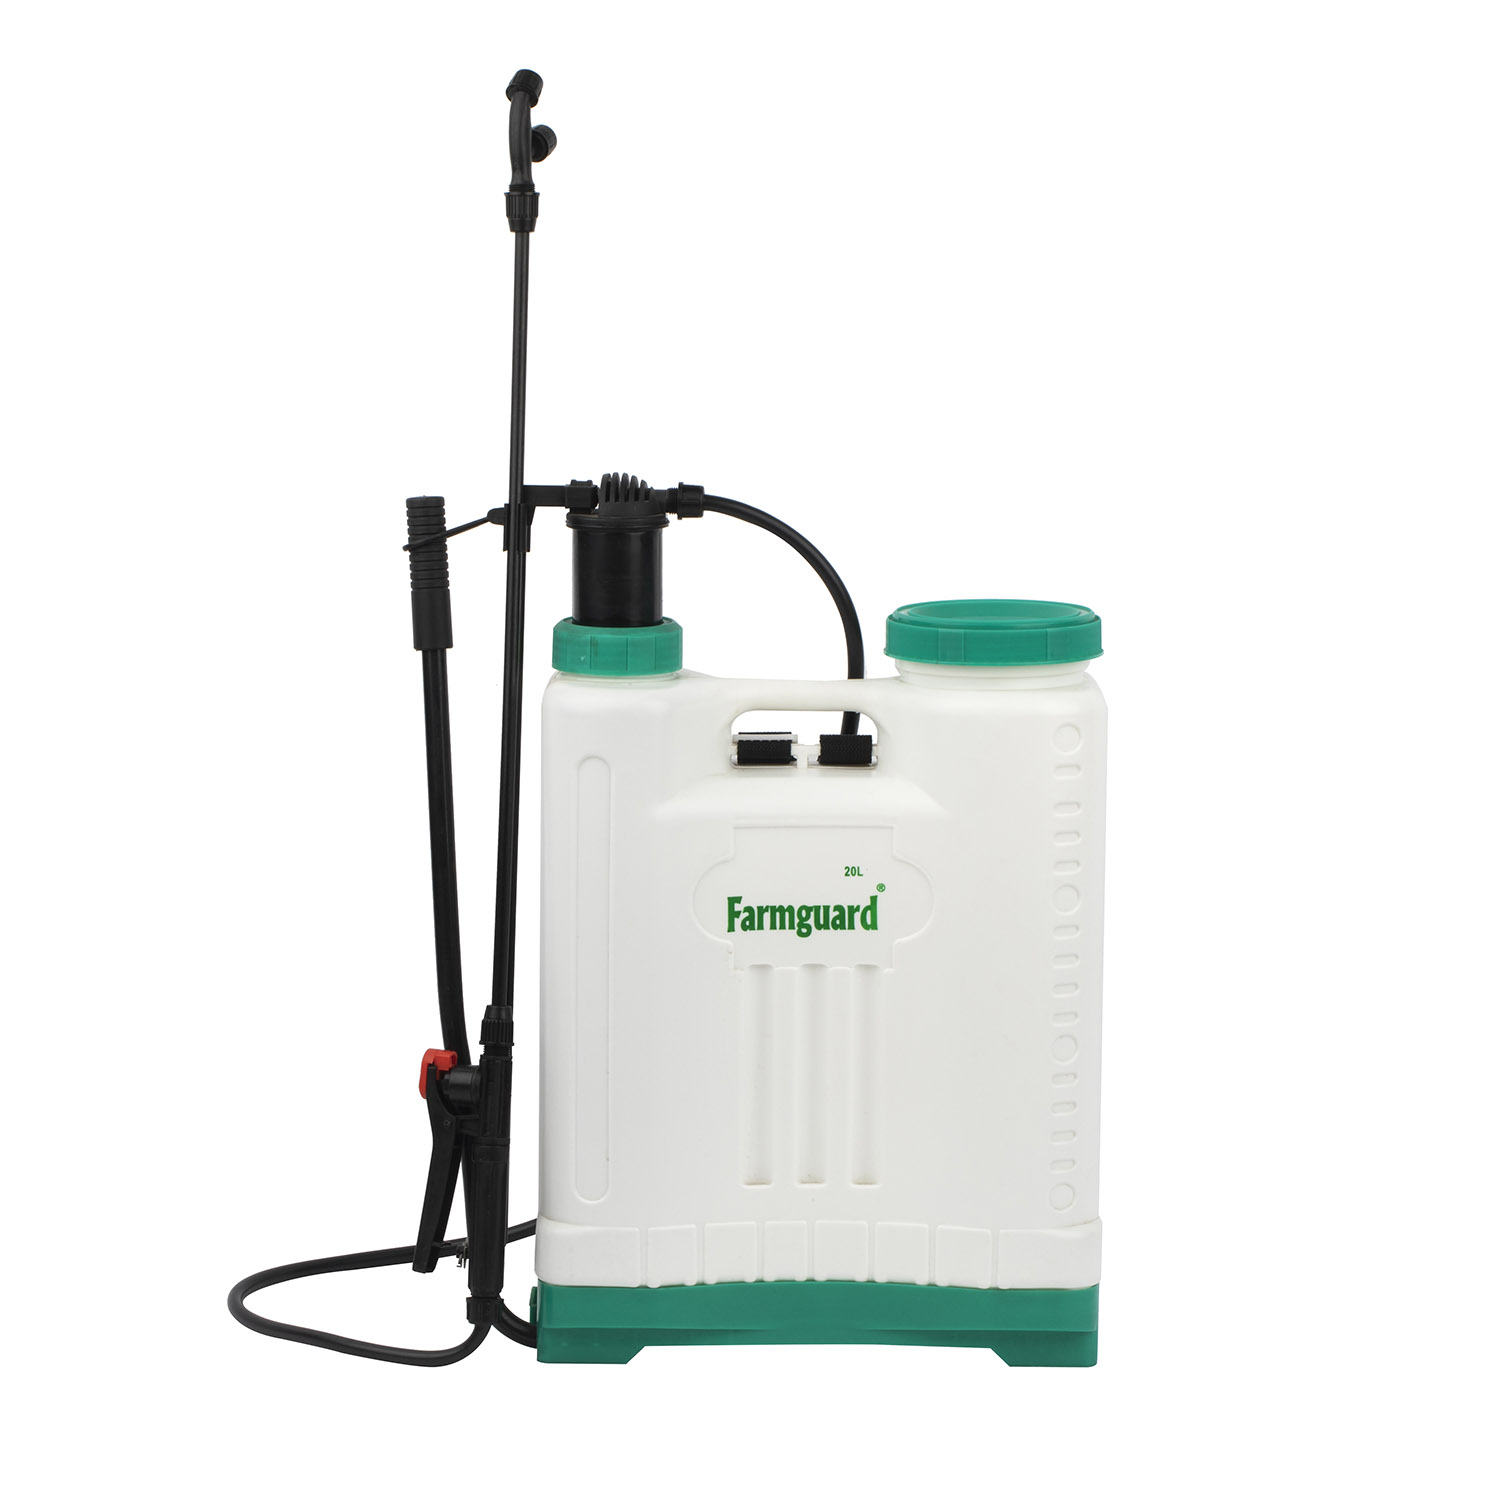 Farmguard new design high quality manual sprayer GF-16S-01C